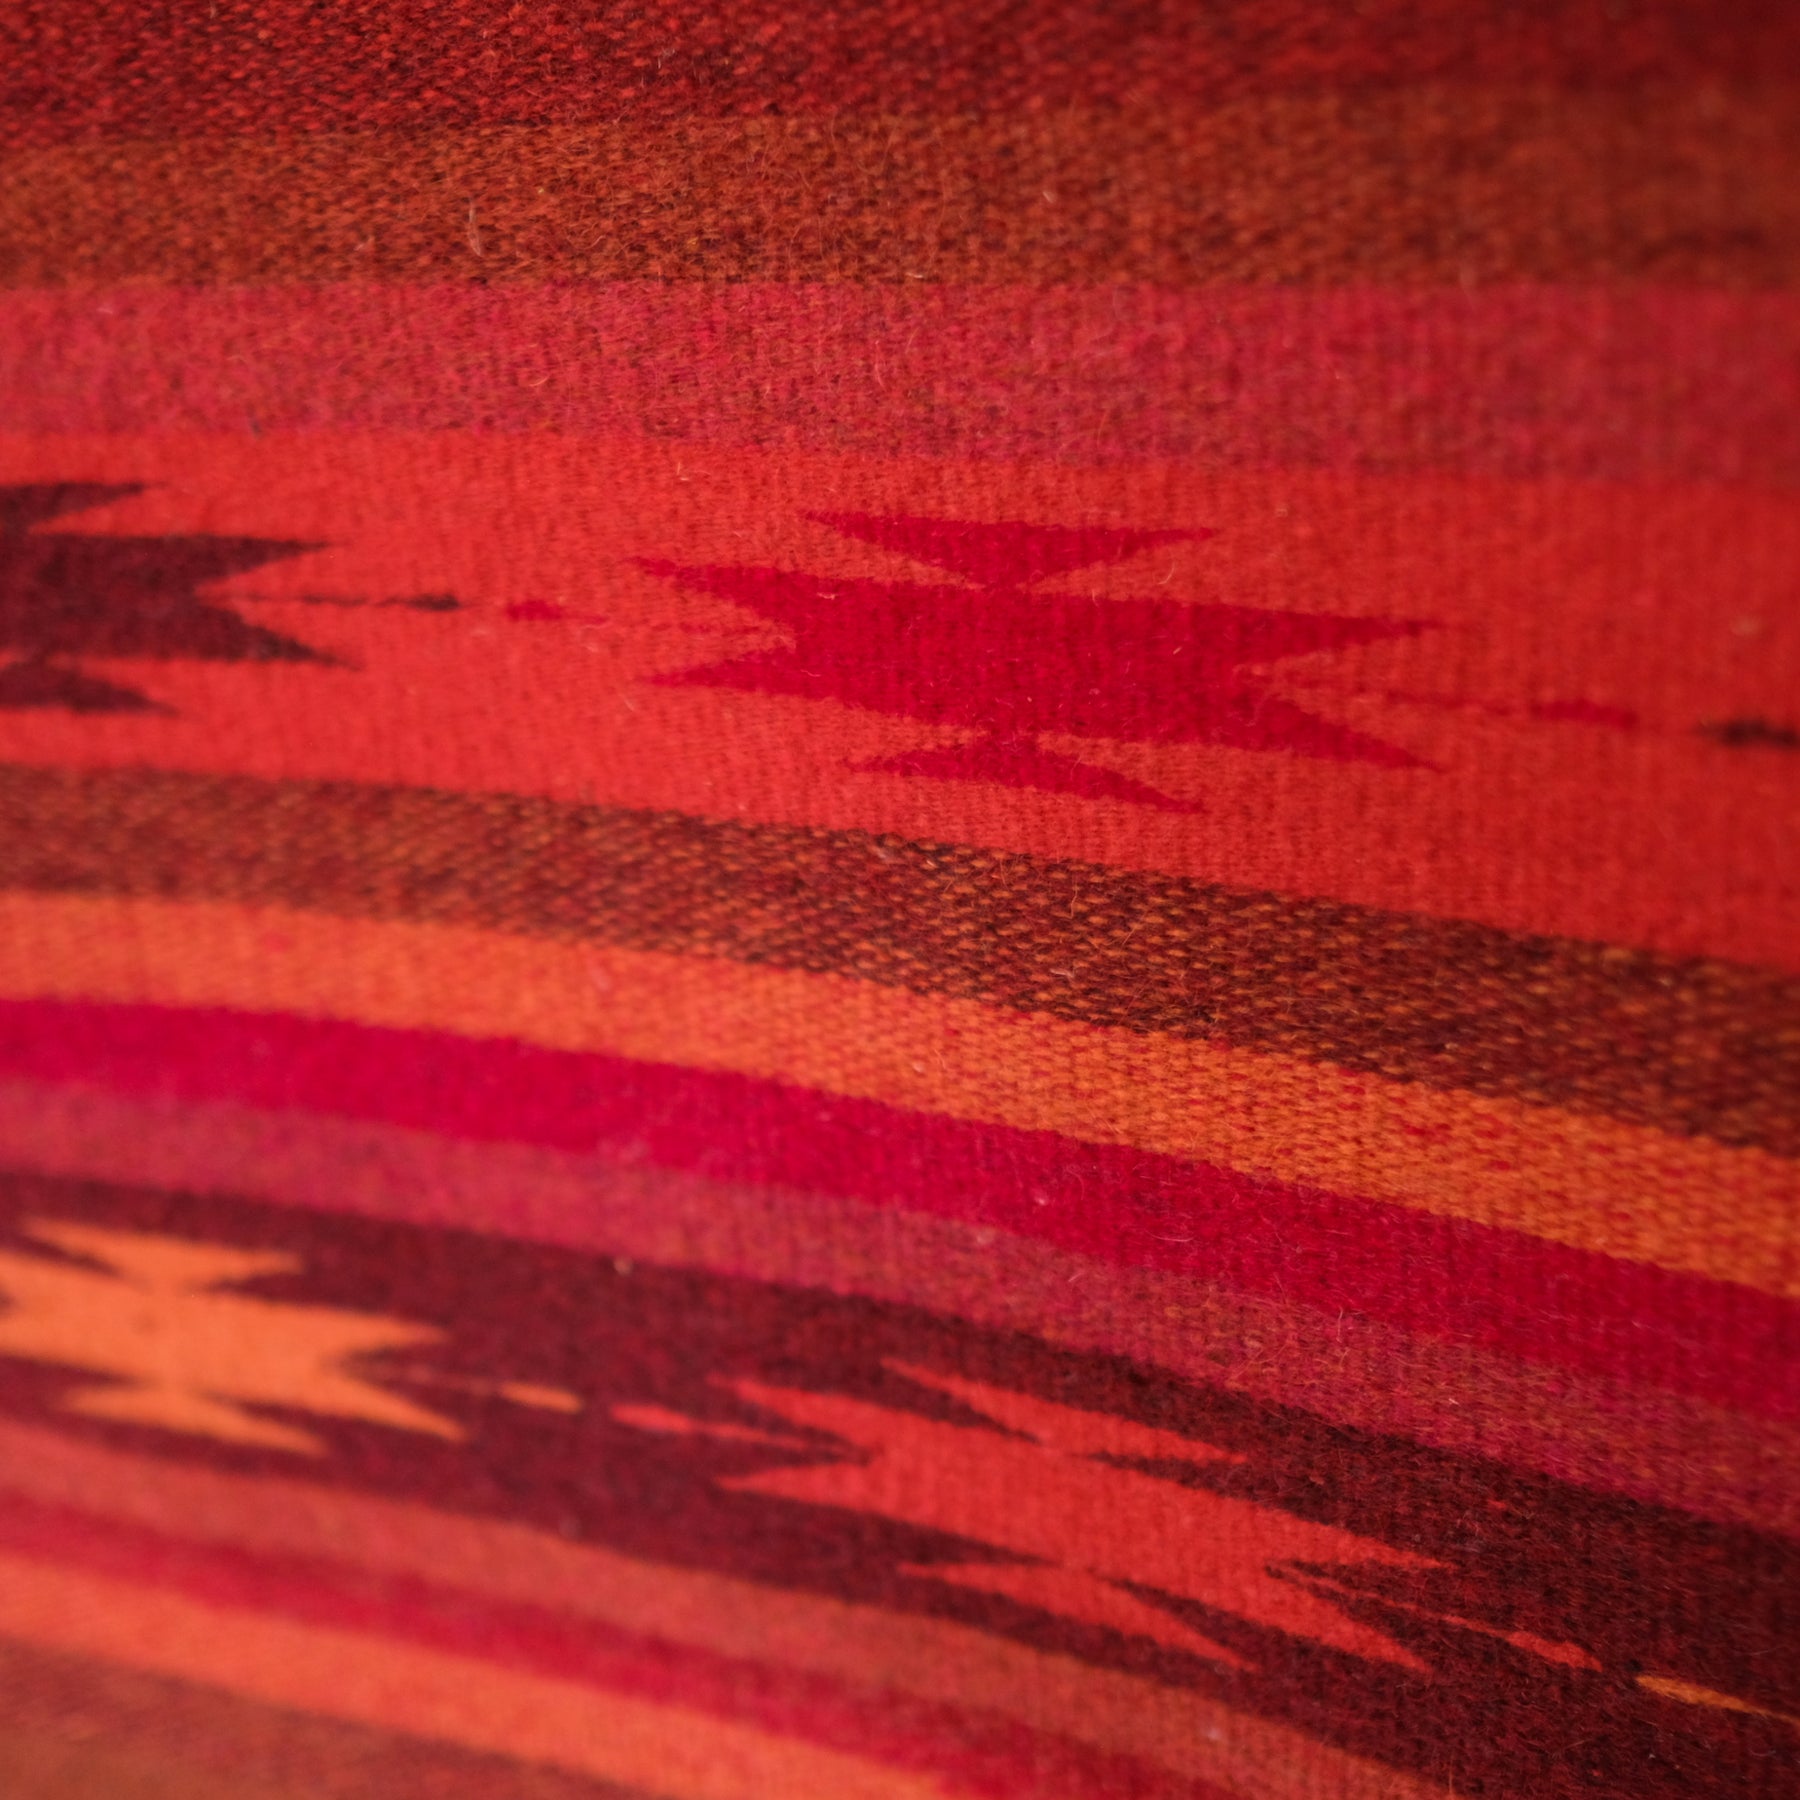 Naturally-dyed Rugs (2' x 3.75') by La Cúpula Rug Gallery + Demetrio Bautista Lazo - New!